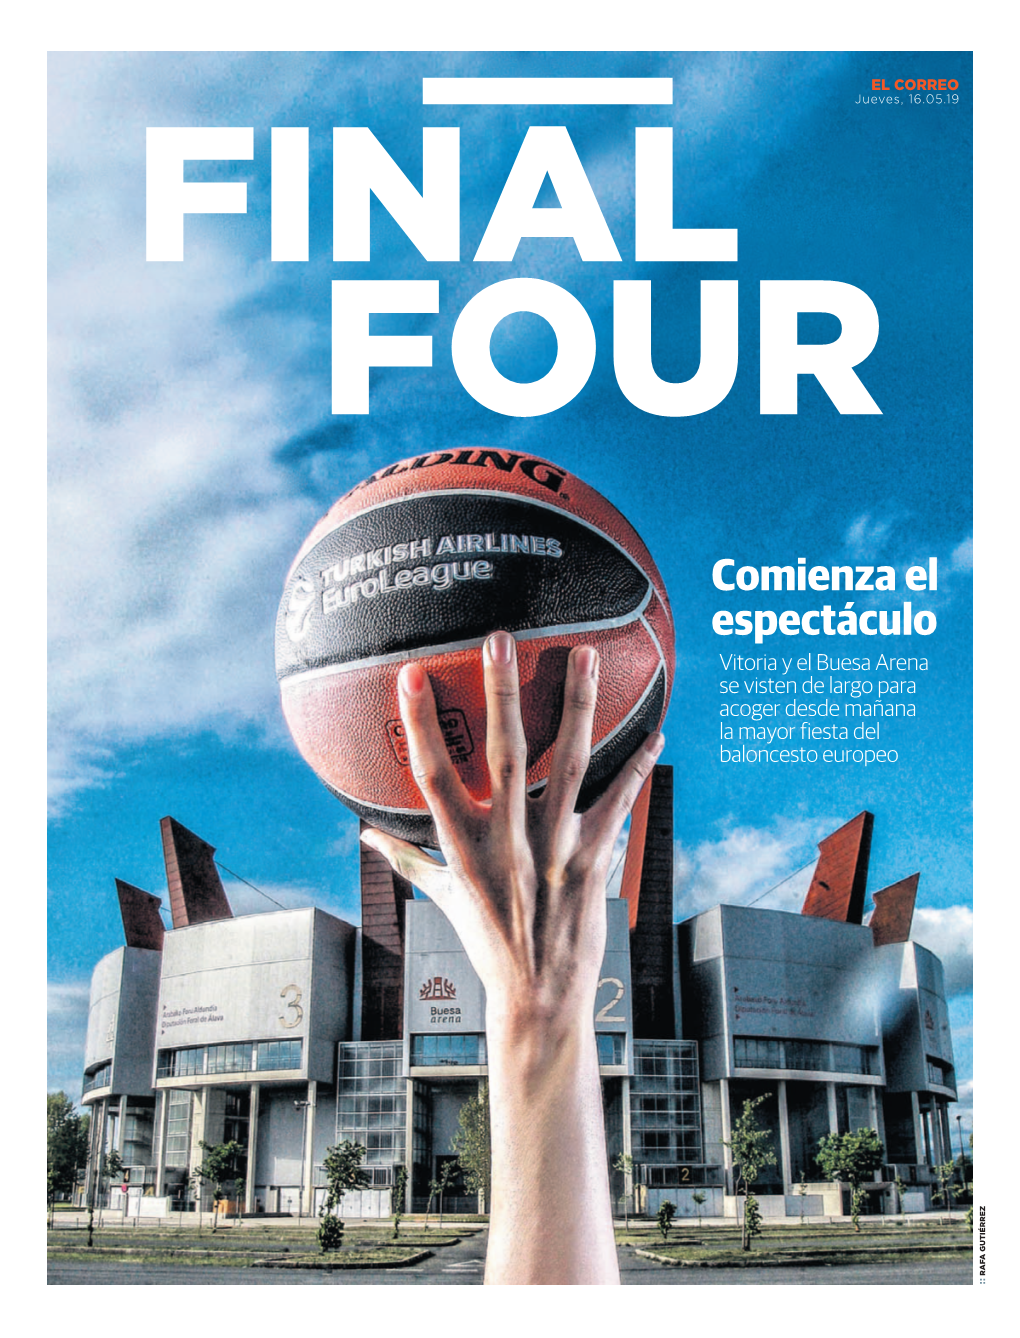 Final Four League 2019 El Correo